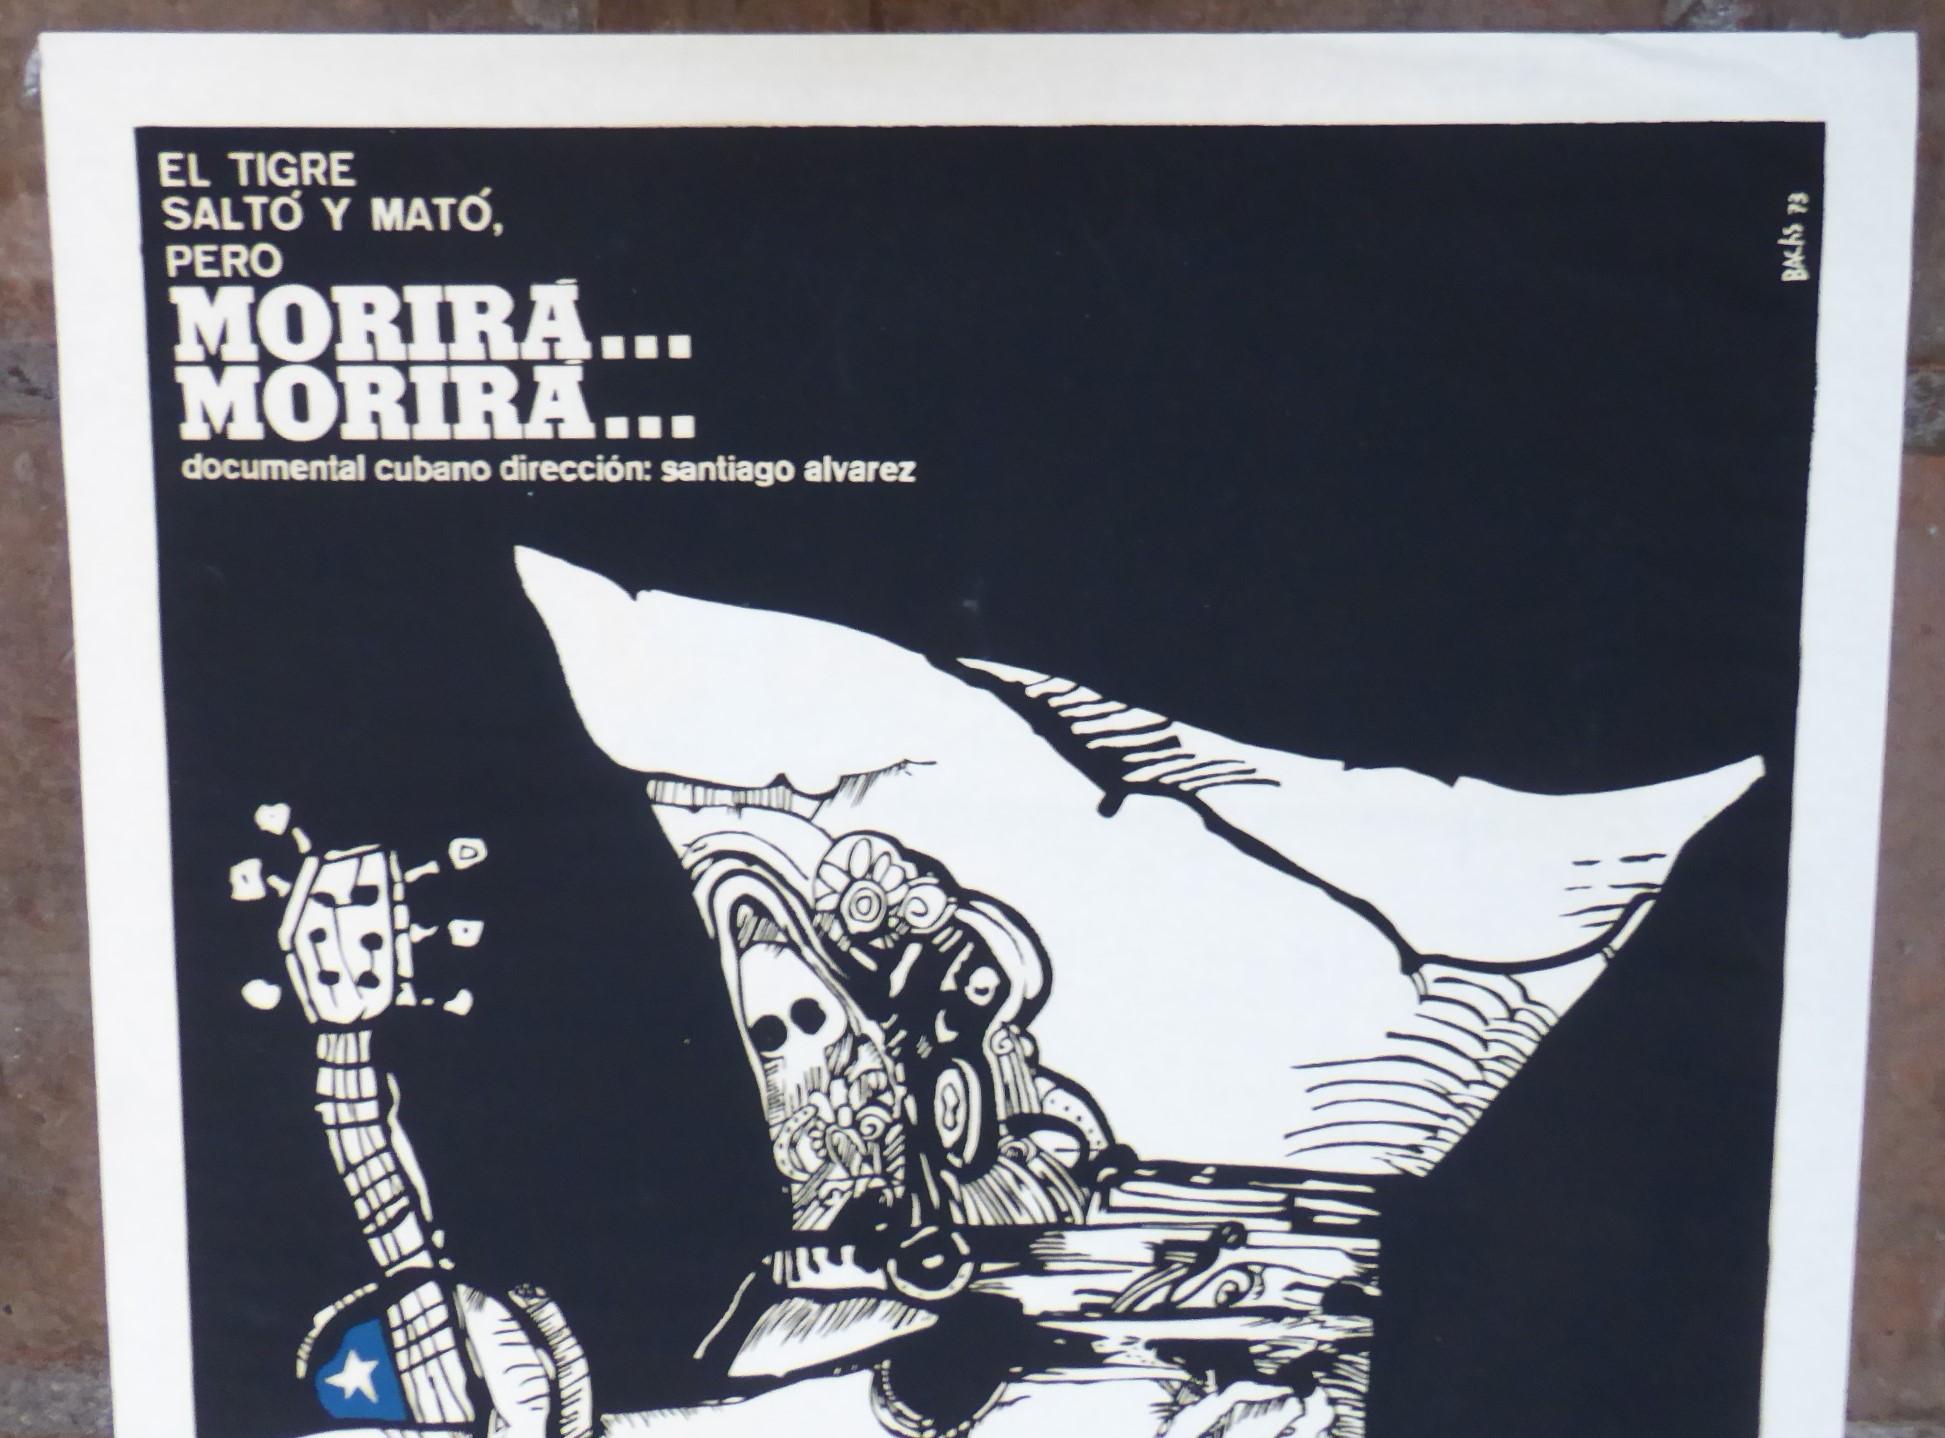 Modern 1973 Vintage Cuban Silkscreen Poster of Docu Chile Coup D'Etat Pinochet by Bachs For Sale